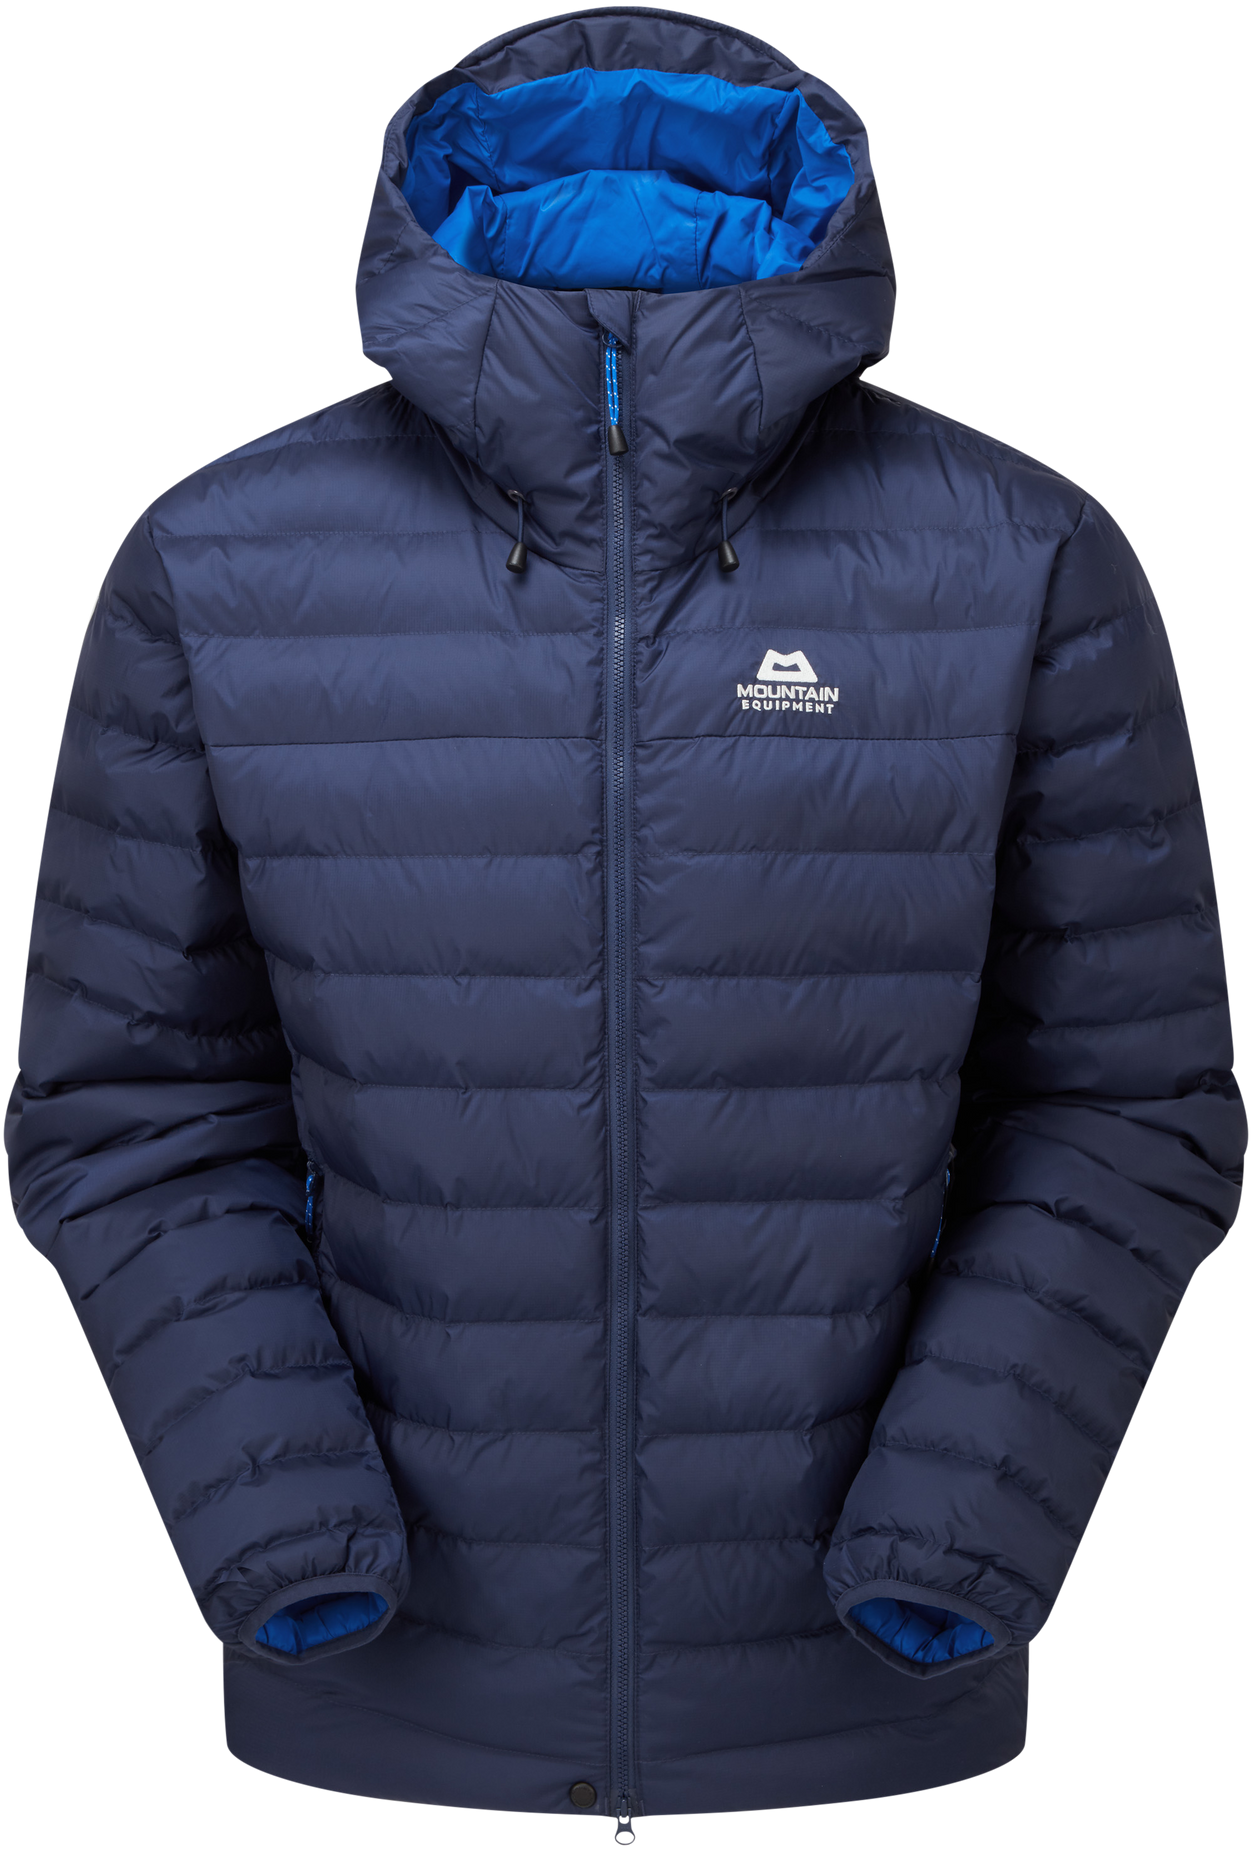 Mountain Equipment pánská zateplovací bunda Superflux Jacket Barva: Medieval Blue, Velikost: XL